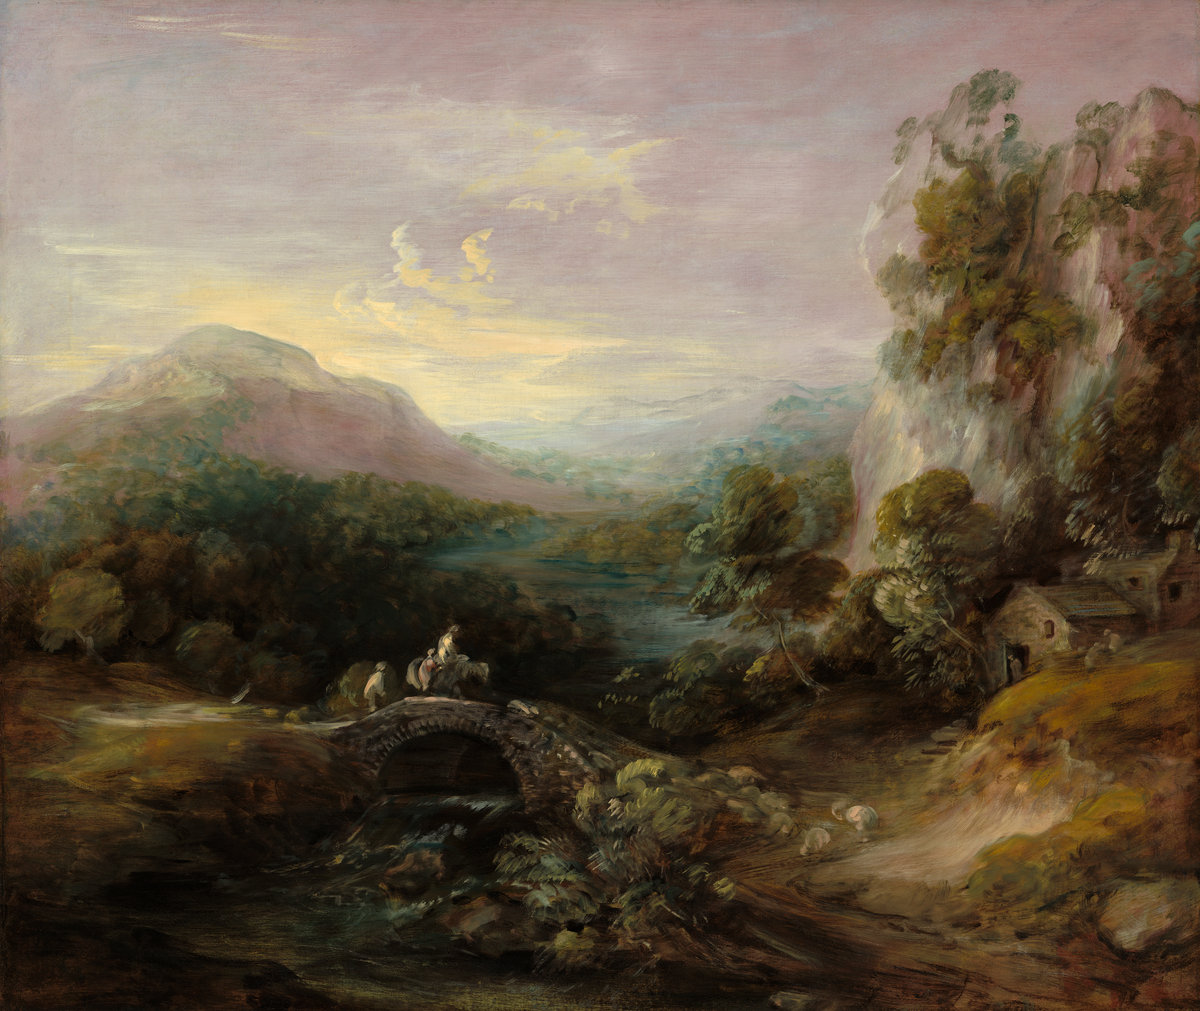 Thomas Gainsborough (British, 1727 - 1788 ), Mountain Landscape with Bridge, c. 1783/1784, oil on canvas, Andrew W. Mellon Collection 1937.1.107